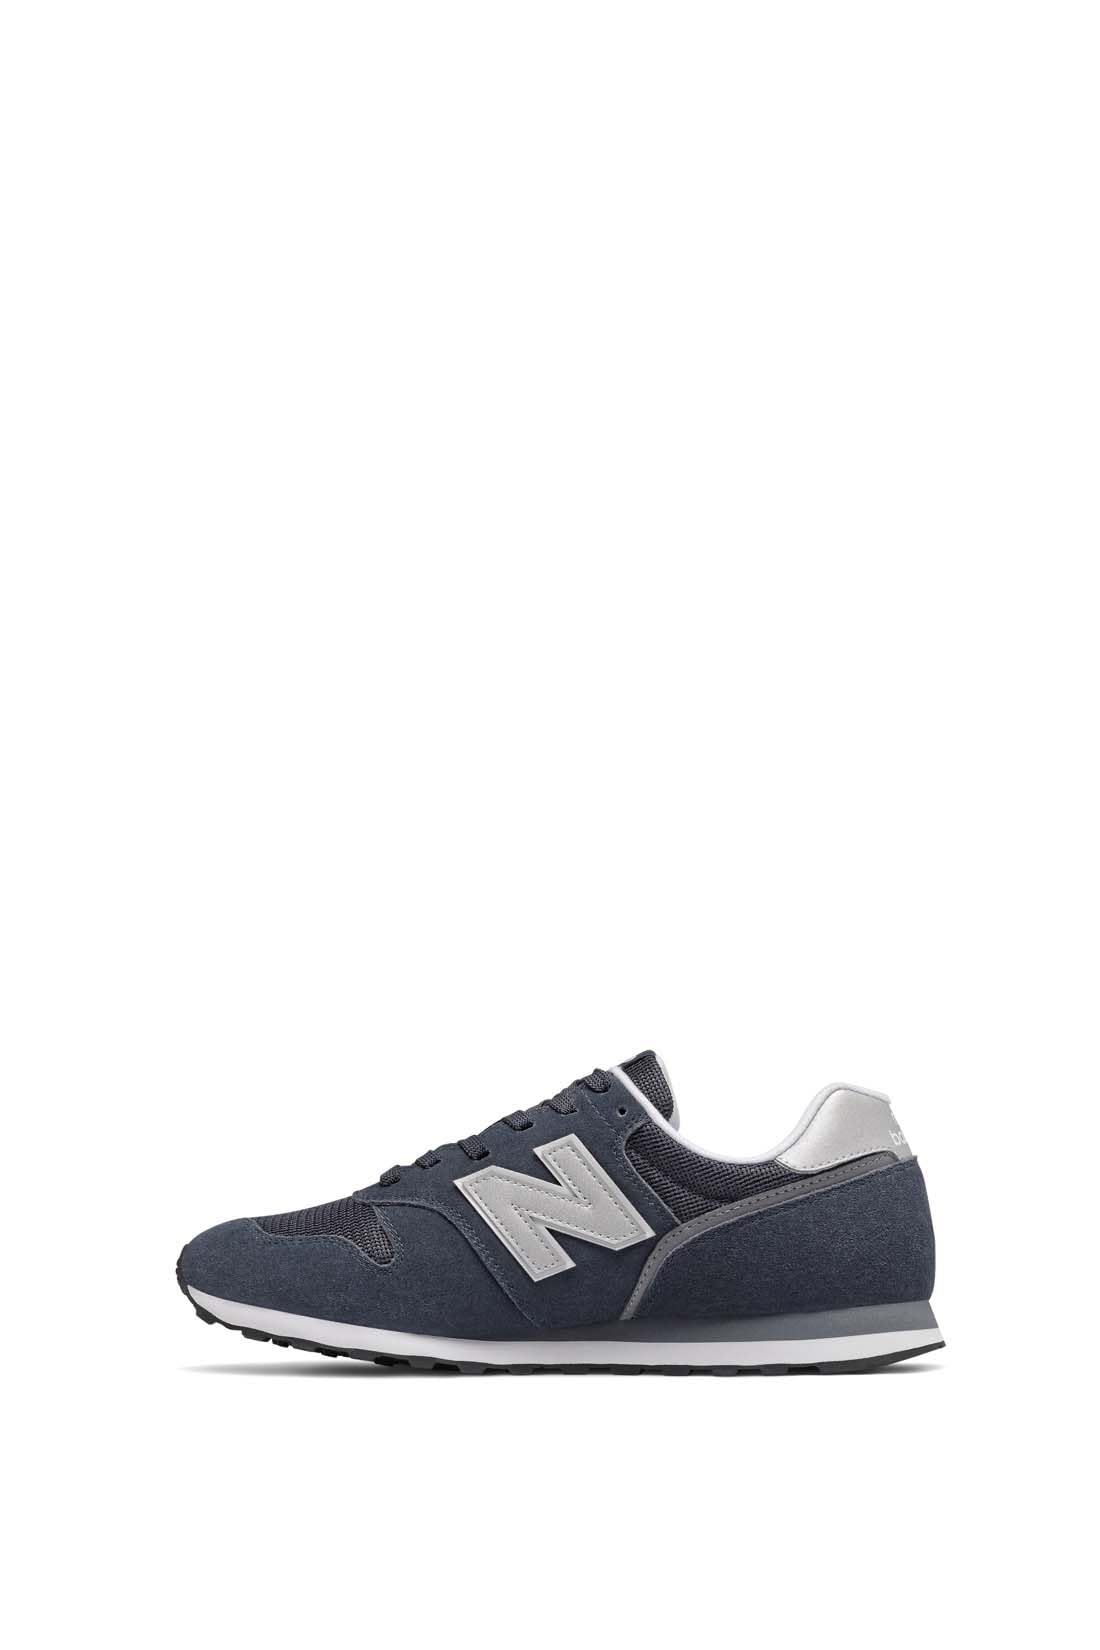 New Balance Herren 373 Core Schuhe, Blau Navy White Cc2,42 EU